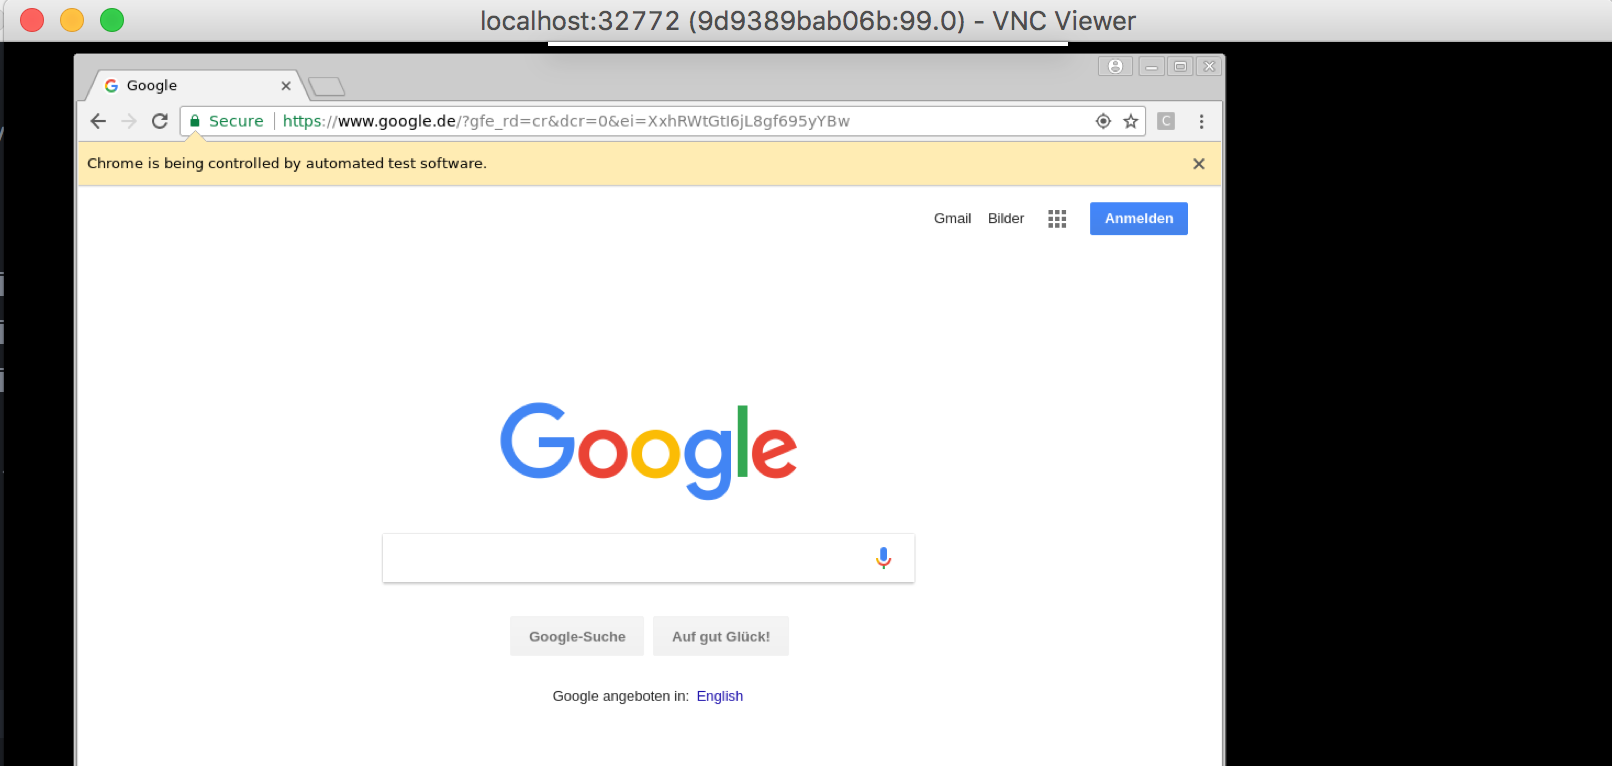 vnc-view-browser-open-docker